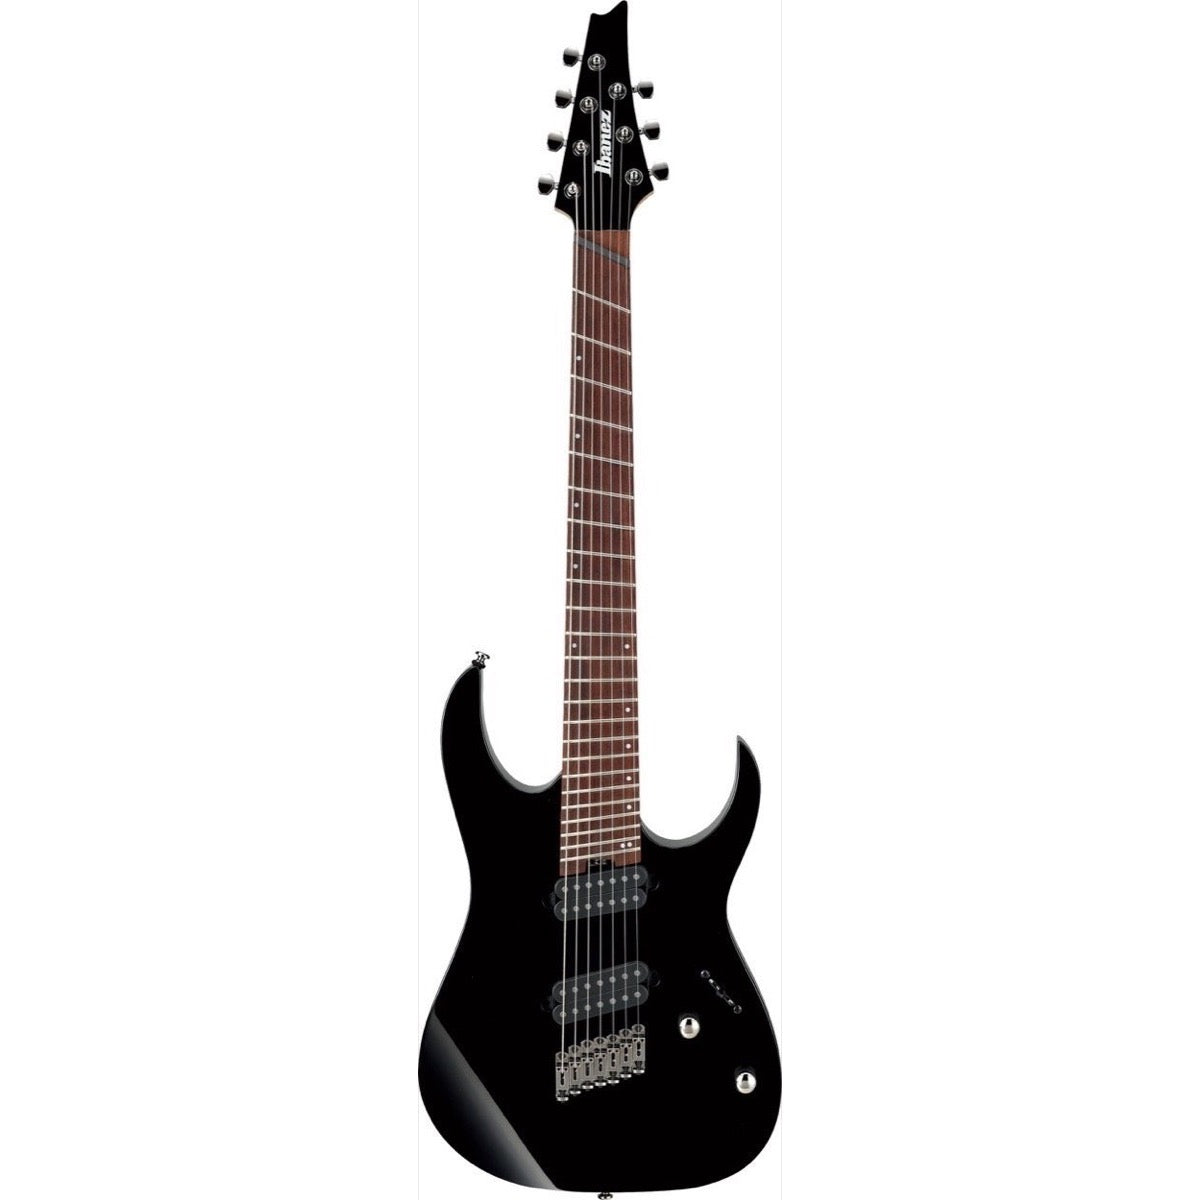 Ibanez RGMS7 Multi-Scale Electric Guitar, Black